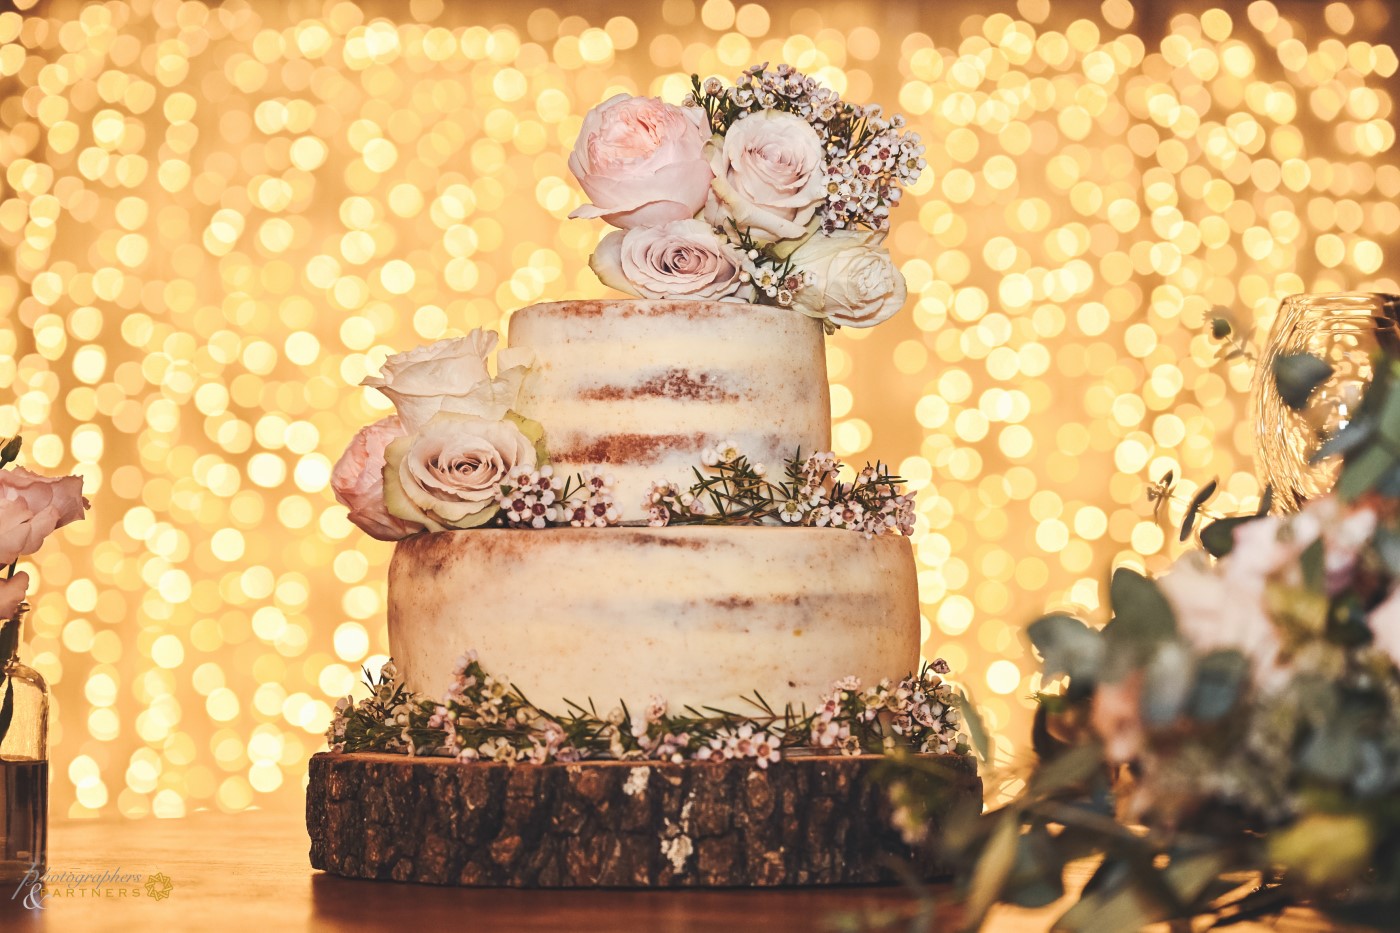 The wedding cake 